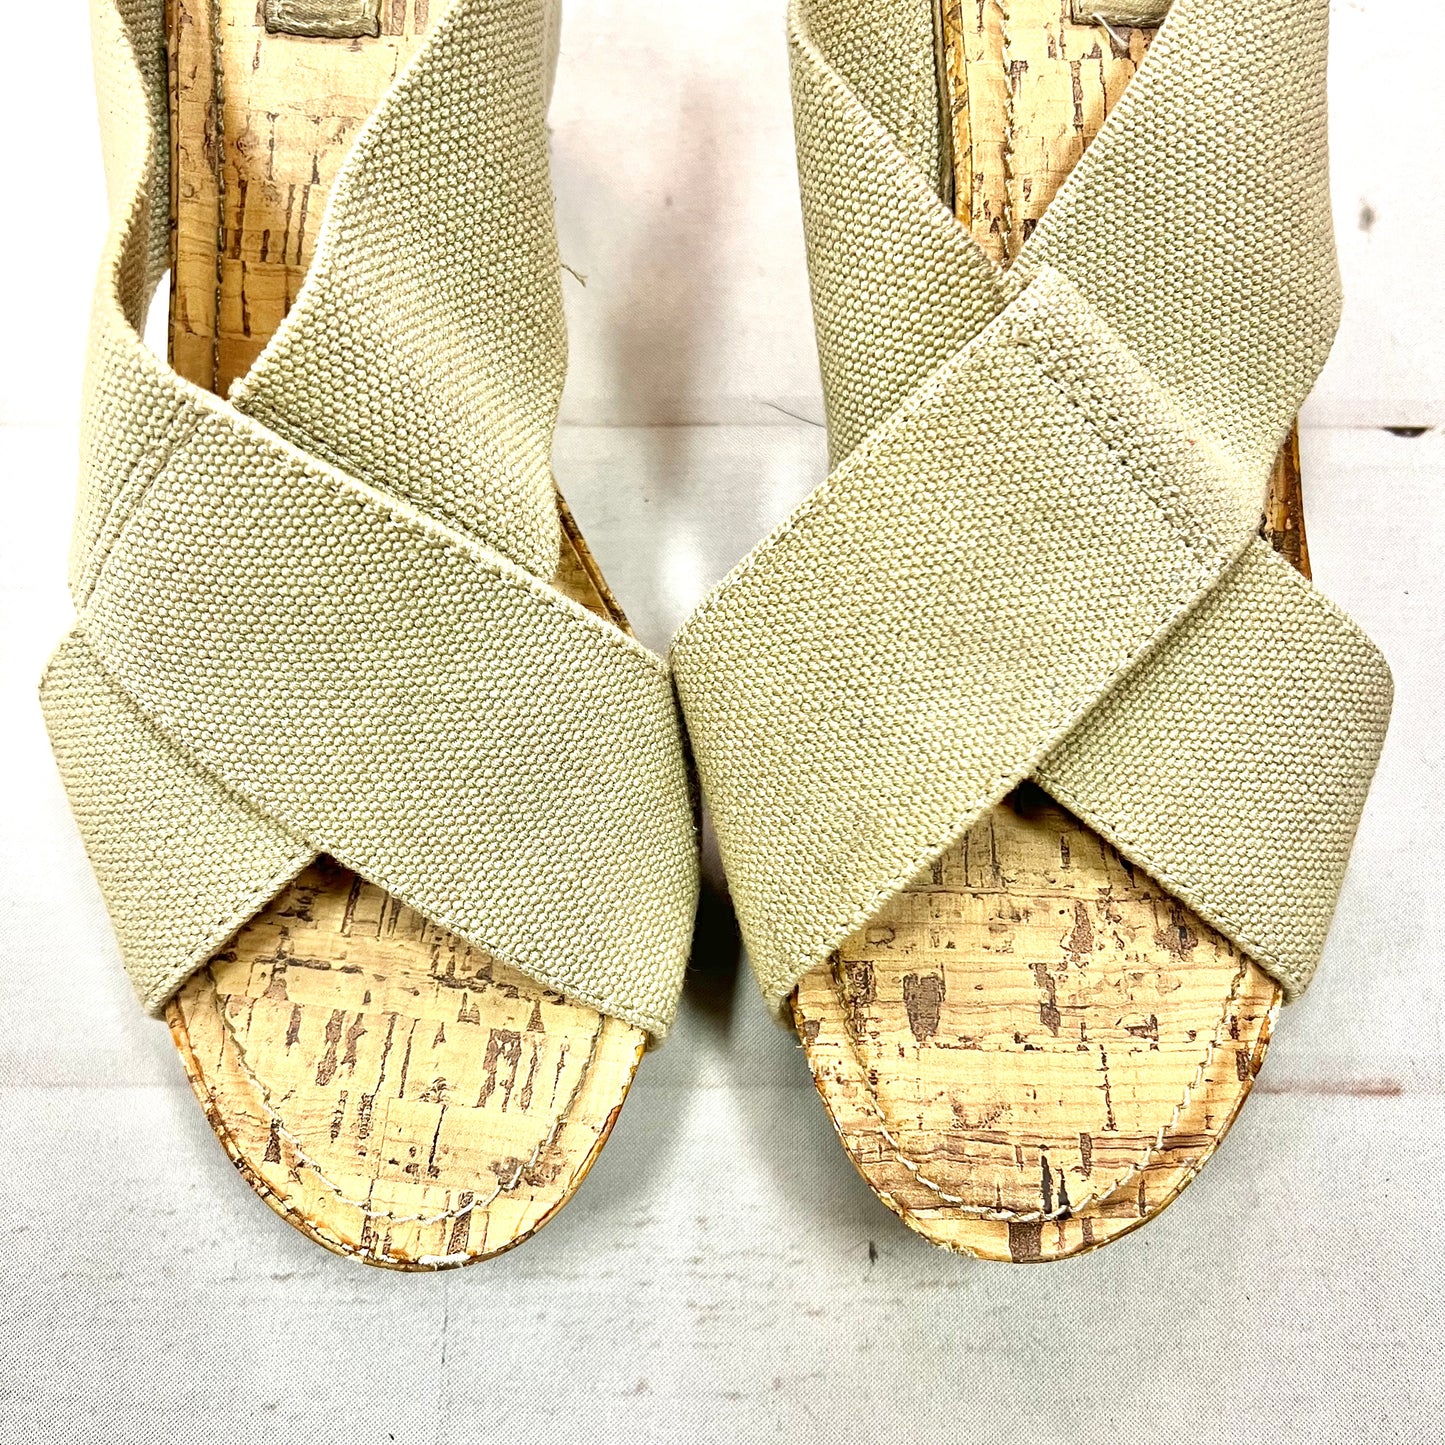 Sandals Heels Wedge By Esprit  Size: 8